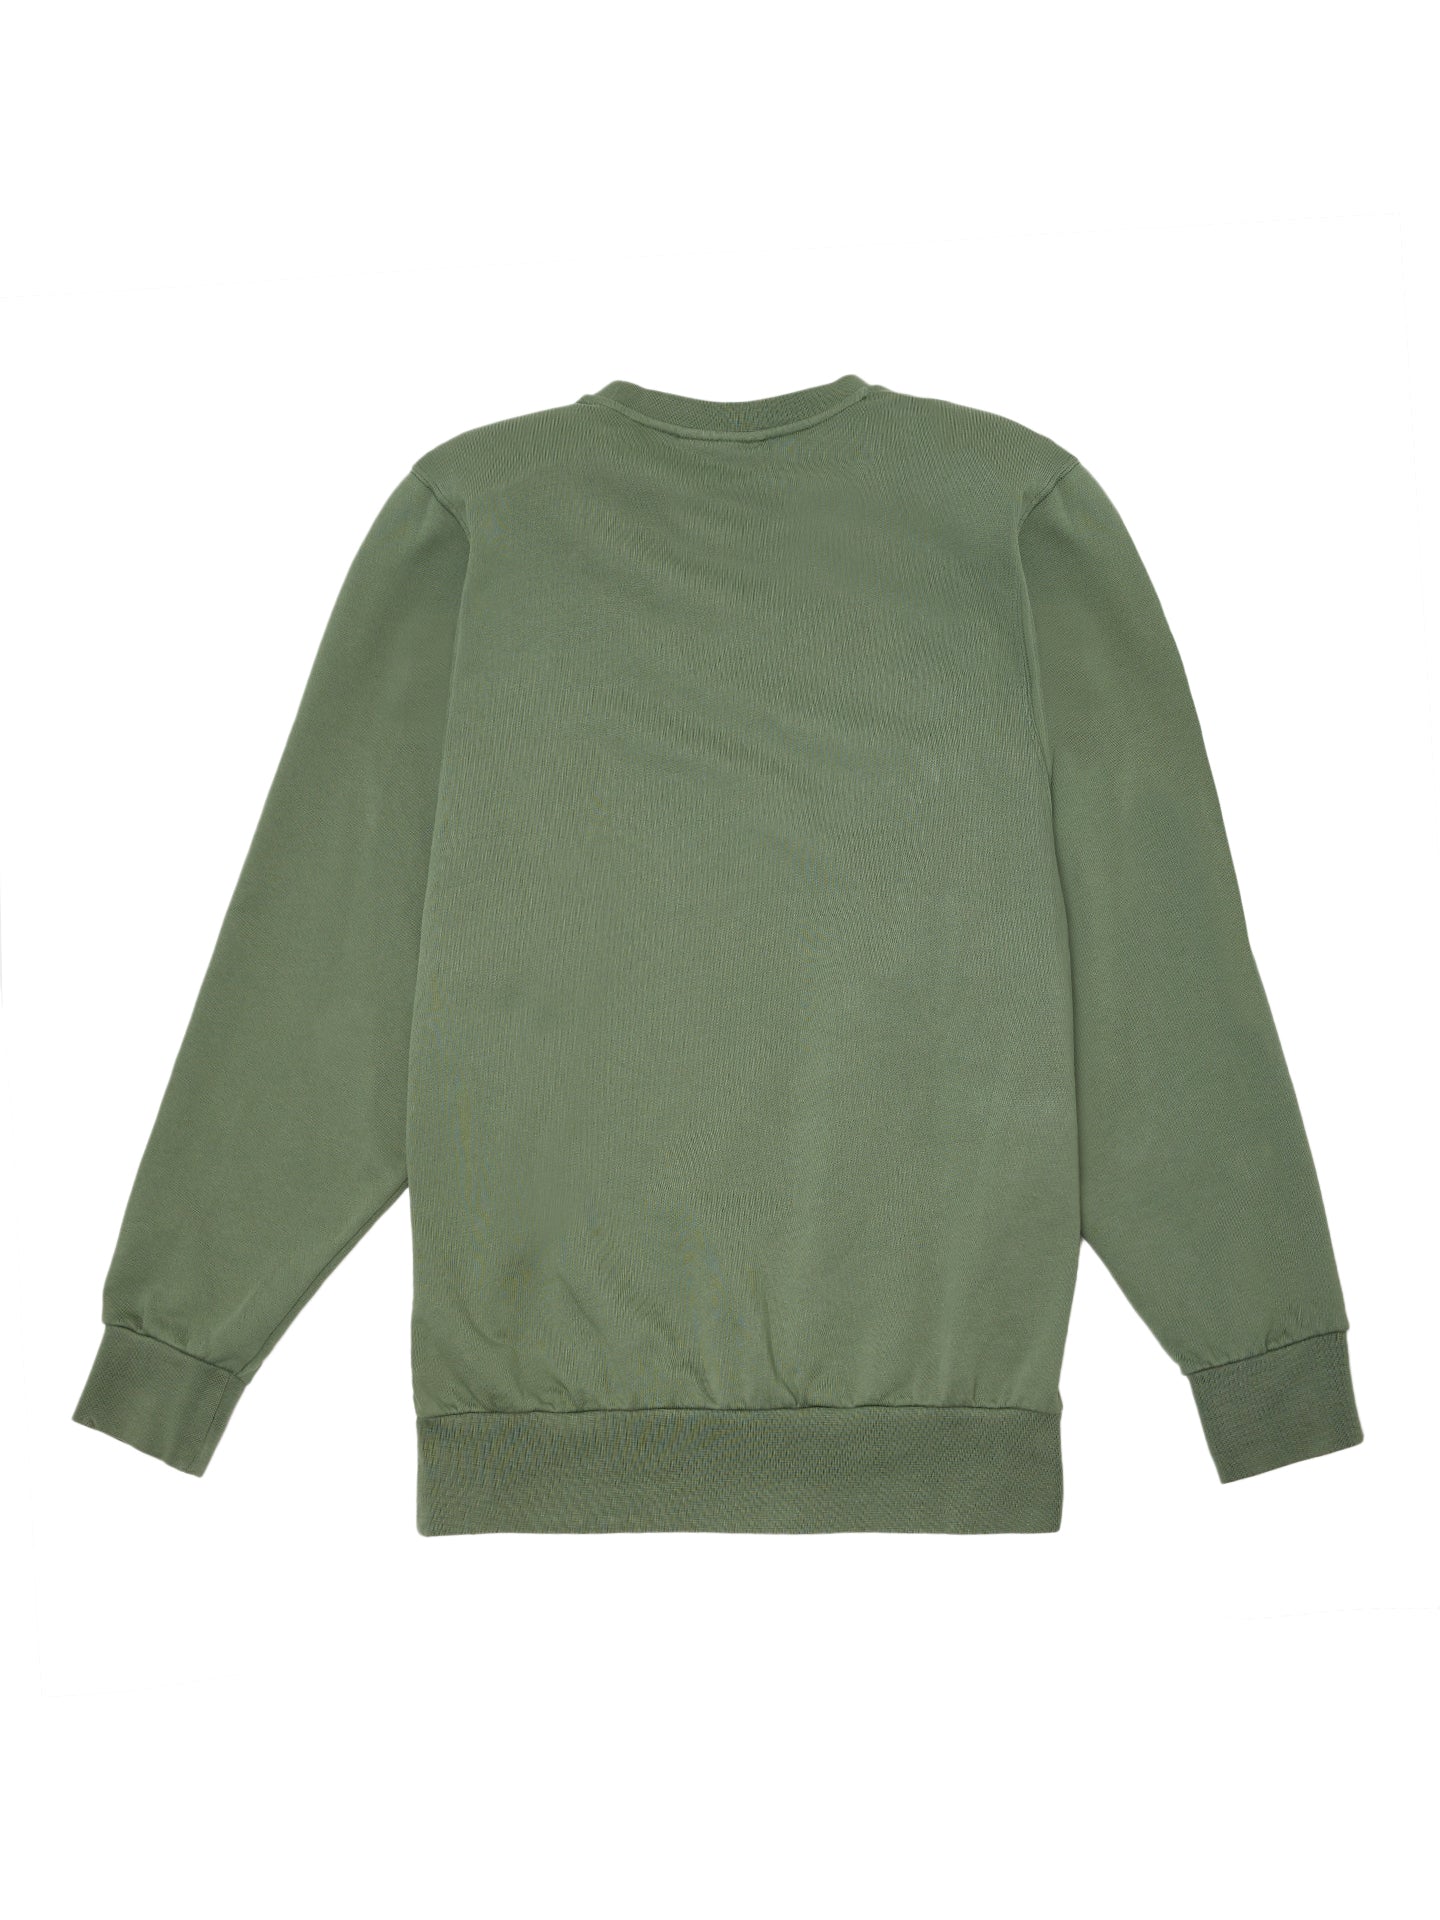 Schulterpolster Sweater - grün